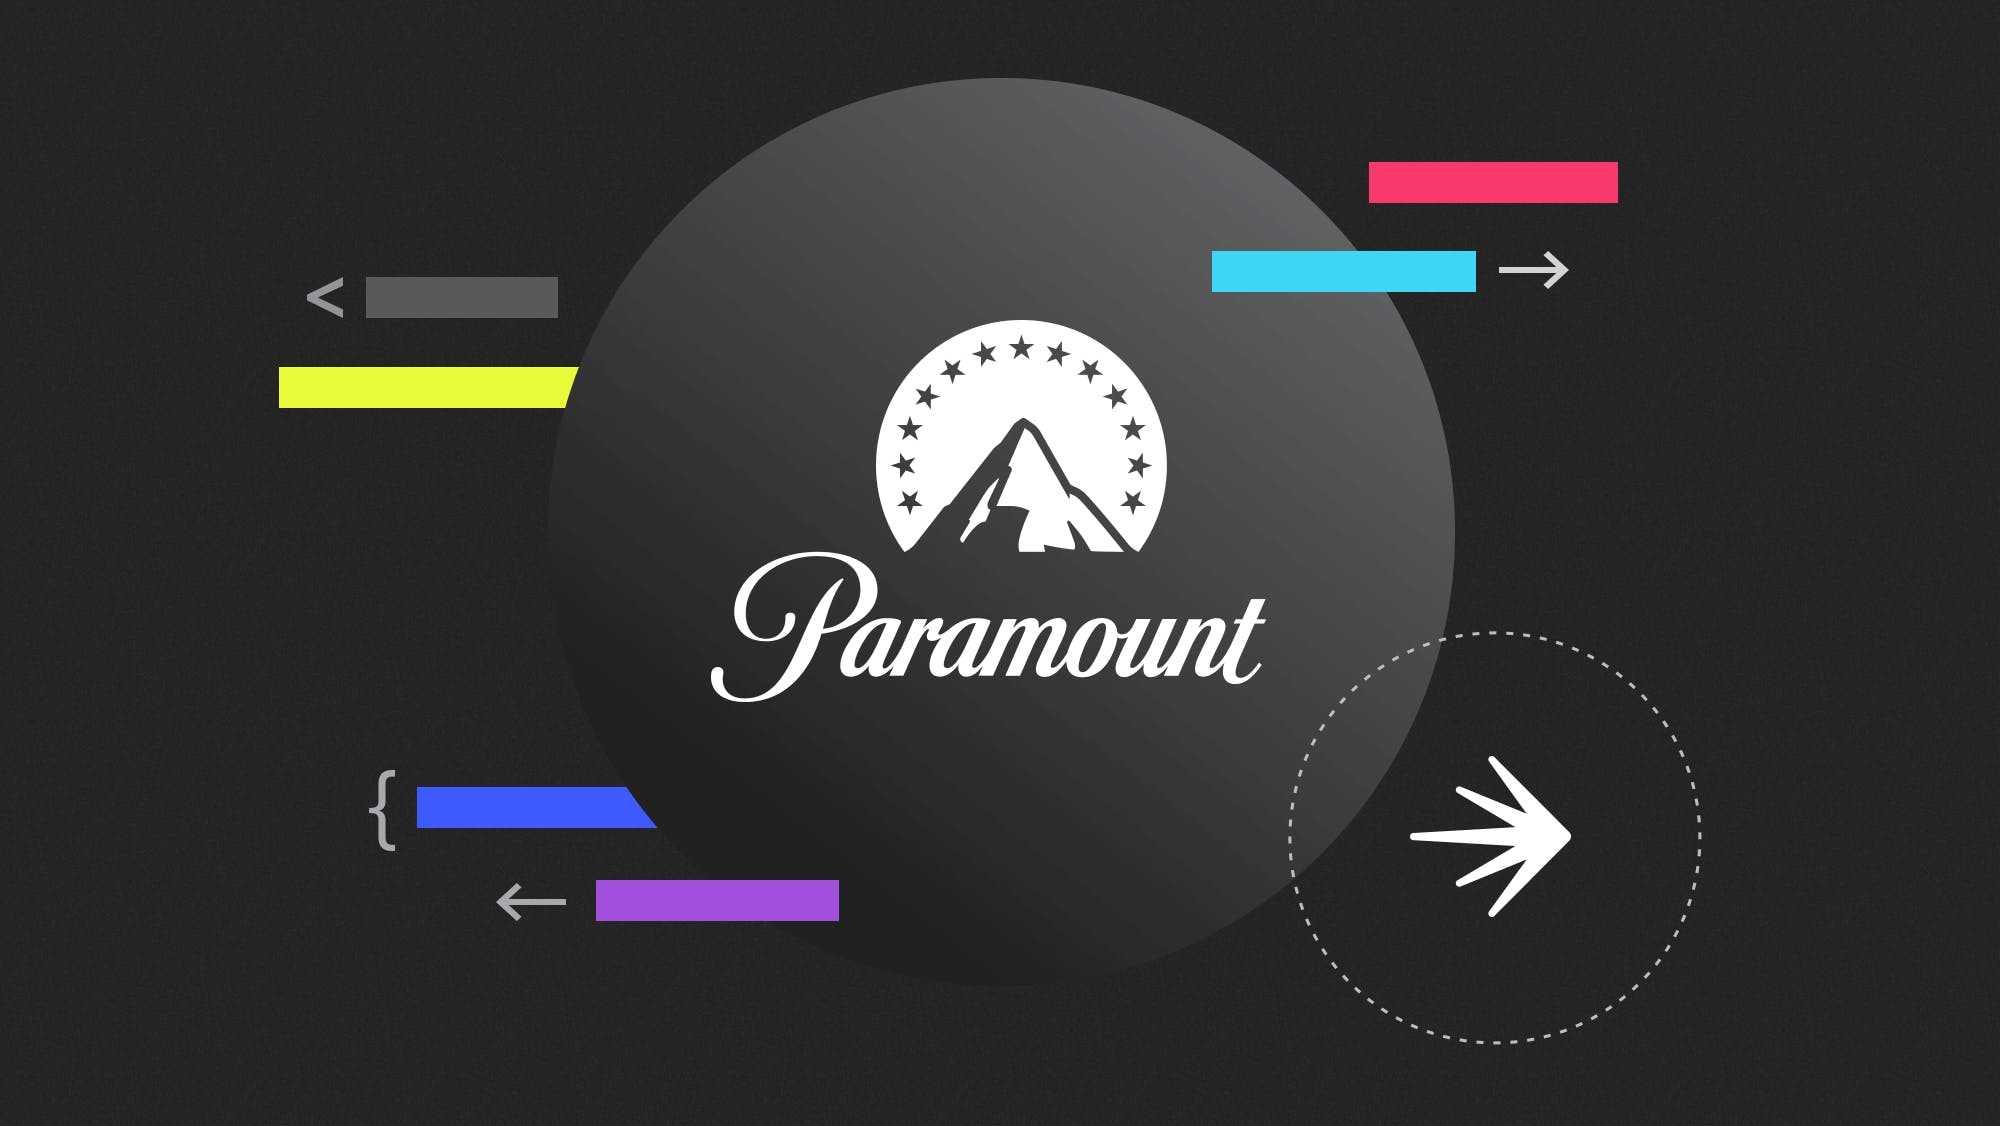 Paramount improves developer productivity 100x